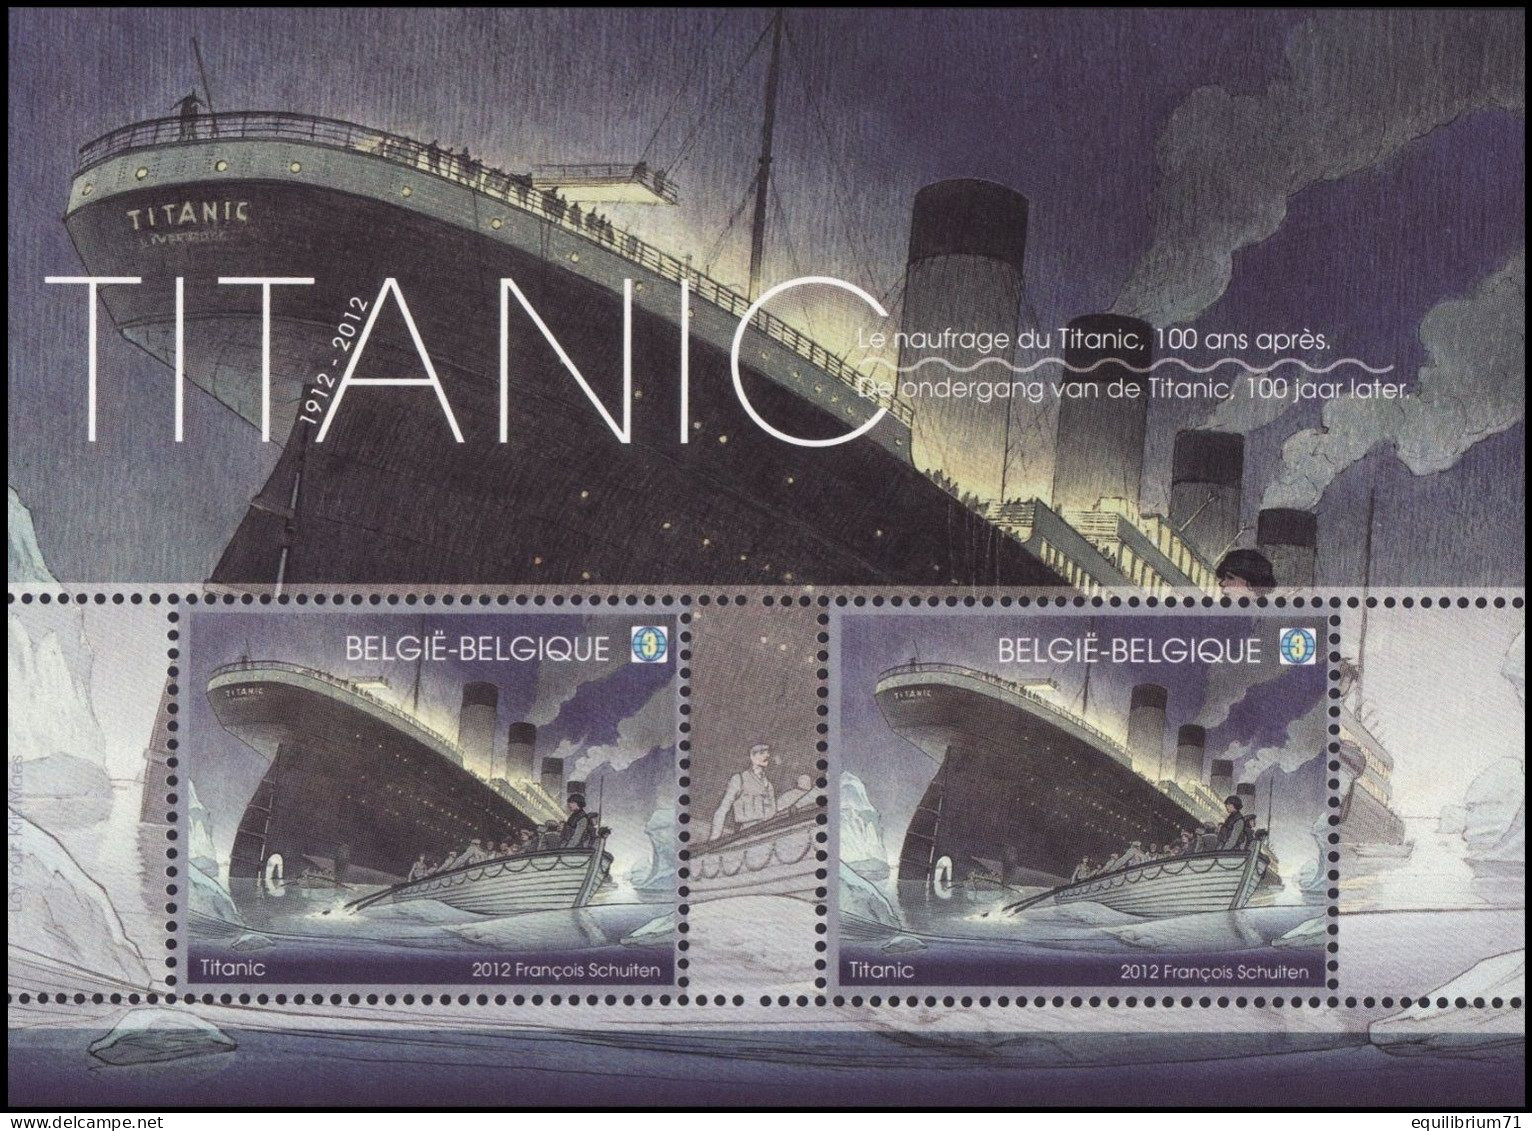 BL200**(4228/4229) - Titanic - Émission Commune Avec Åland / Gemeenschappelijke Uitgifte Met Åland - MONDE - Philastrips